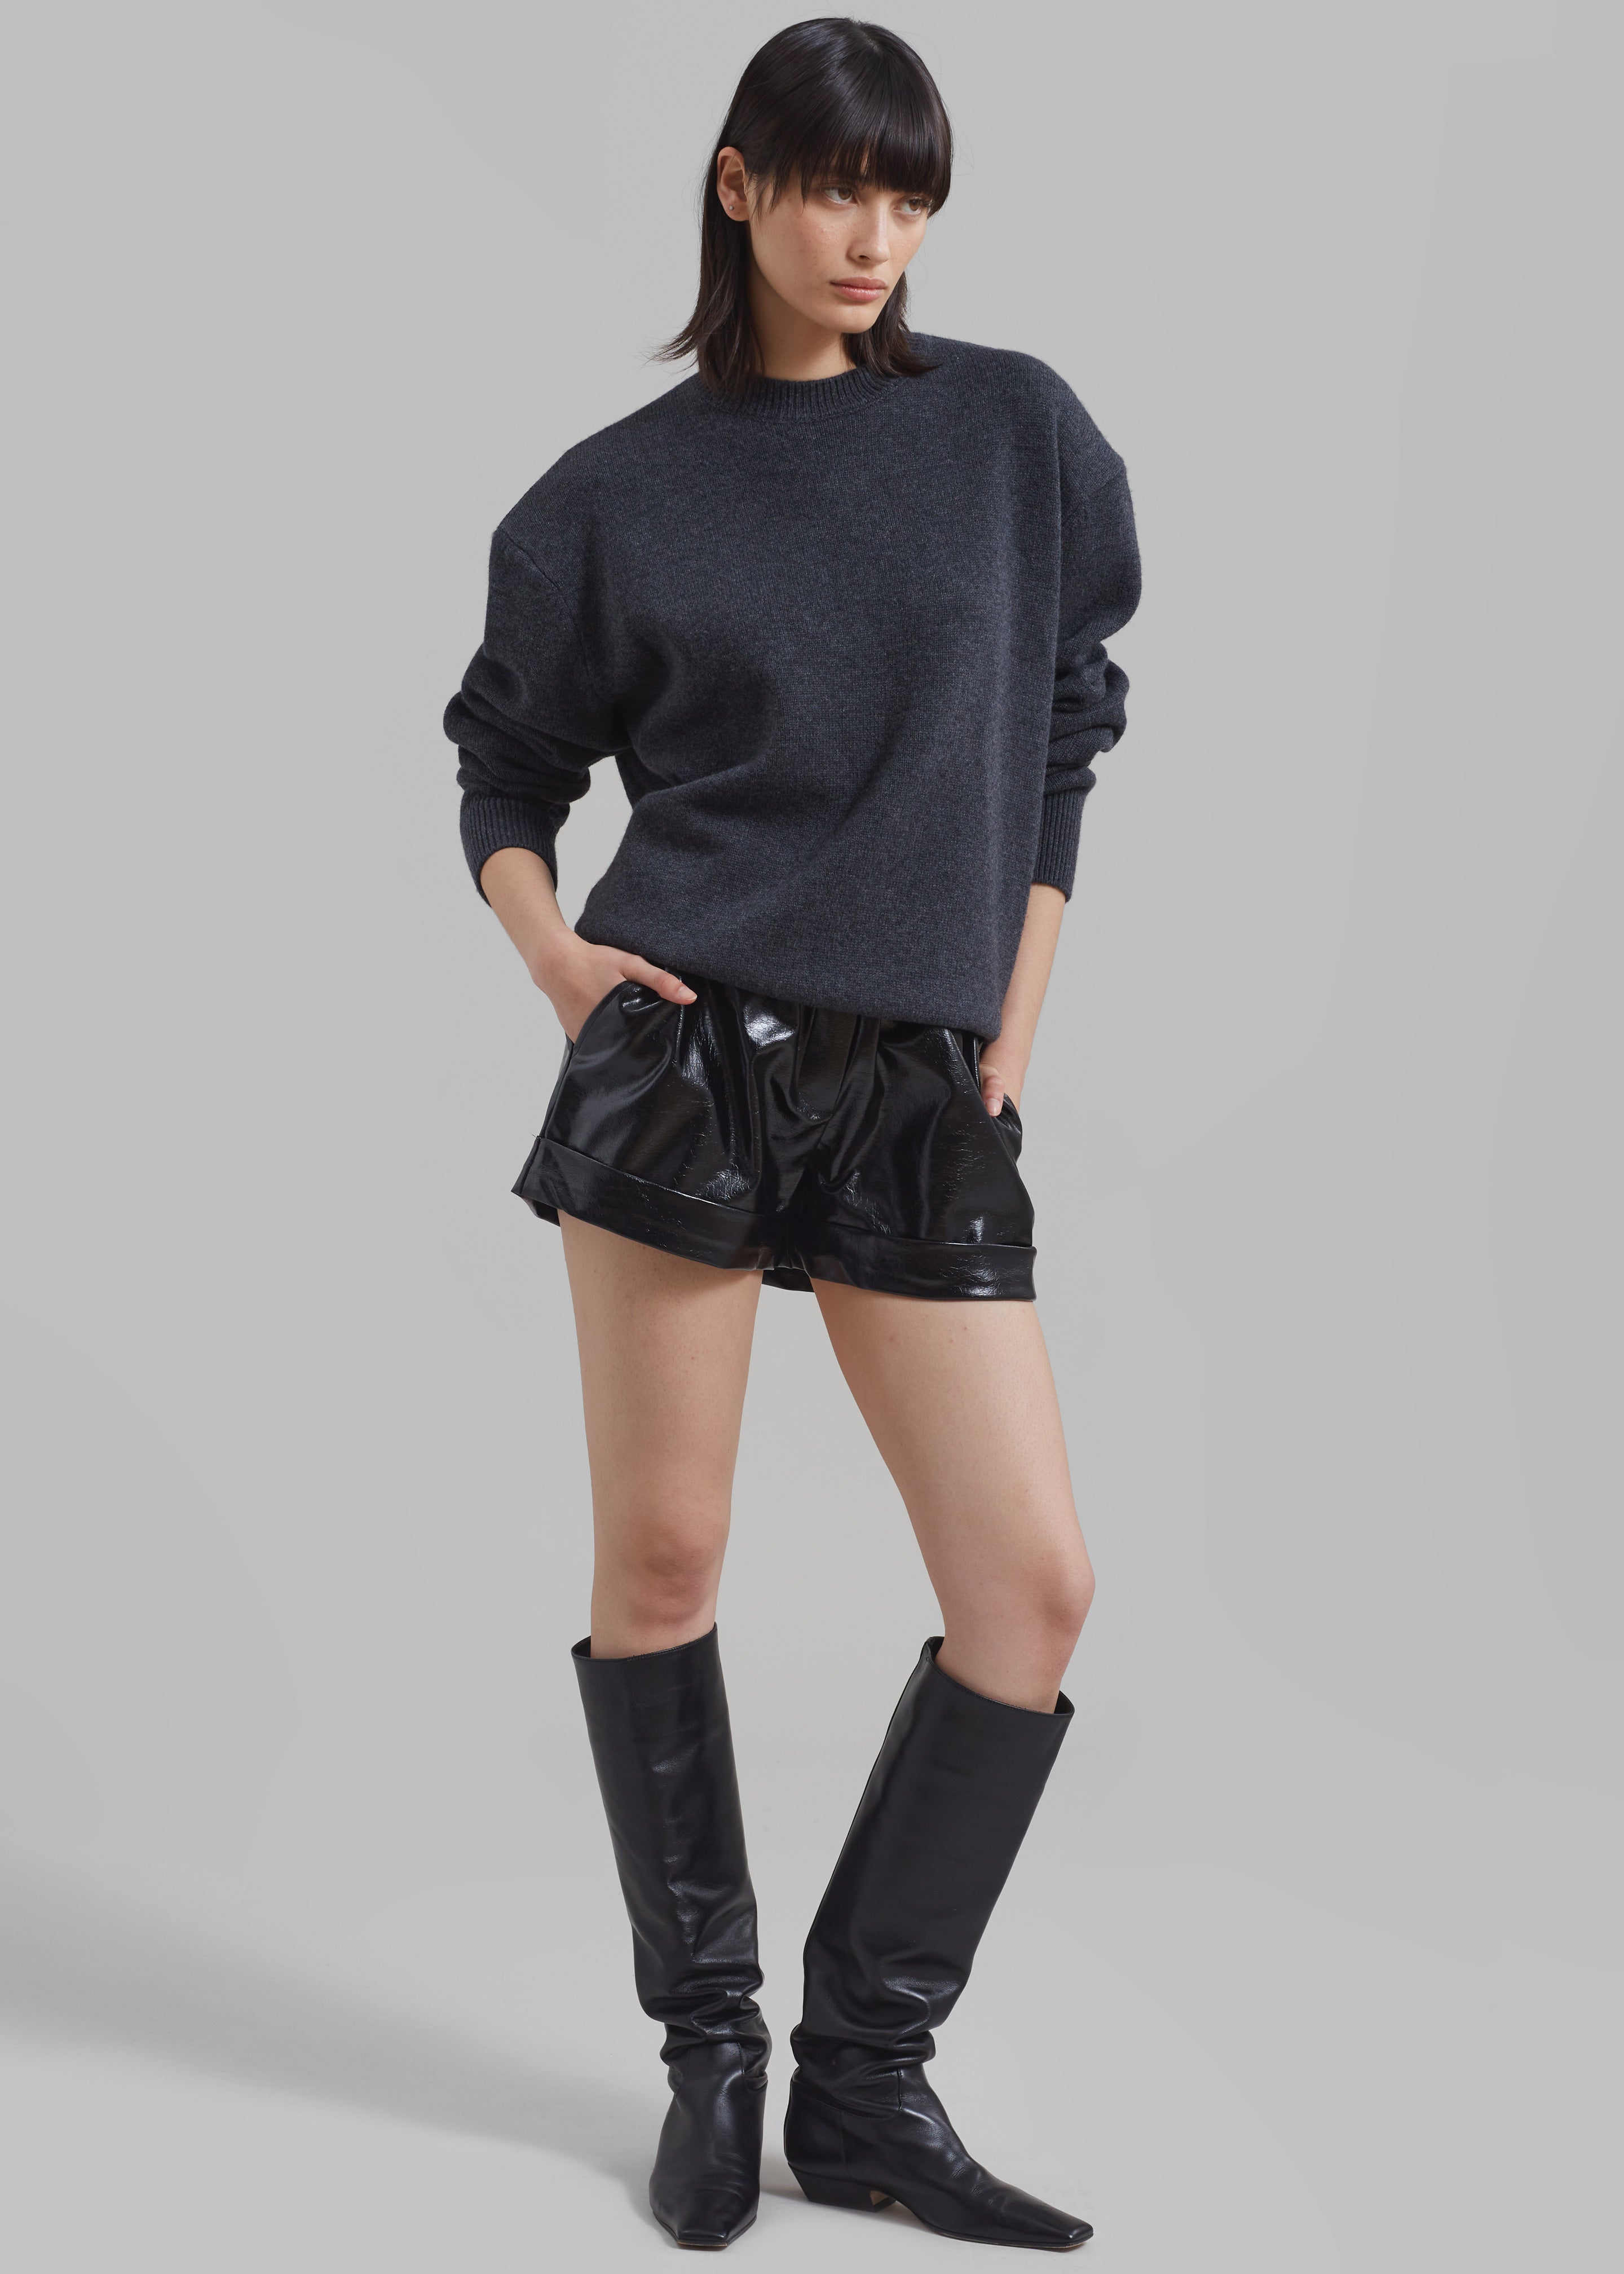 Kassy Faux Leather Shorts - Black - 2